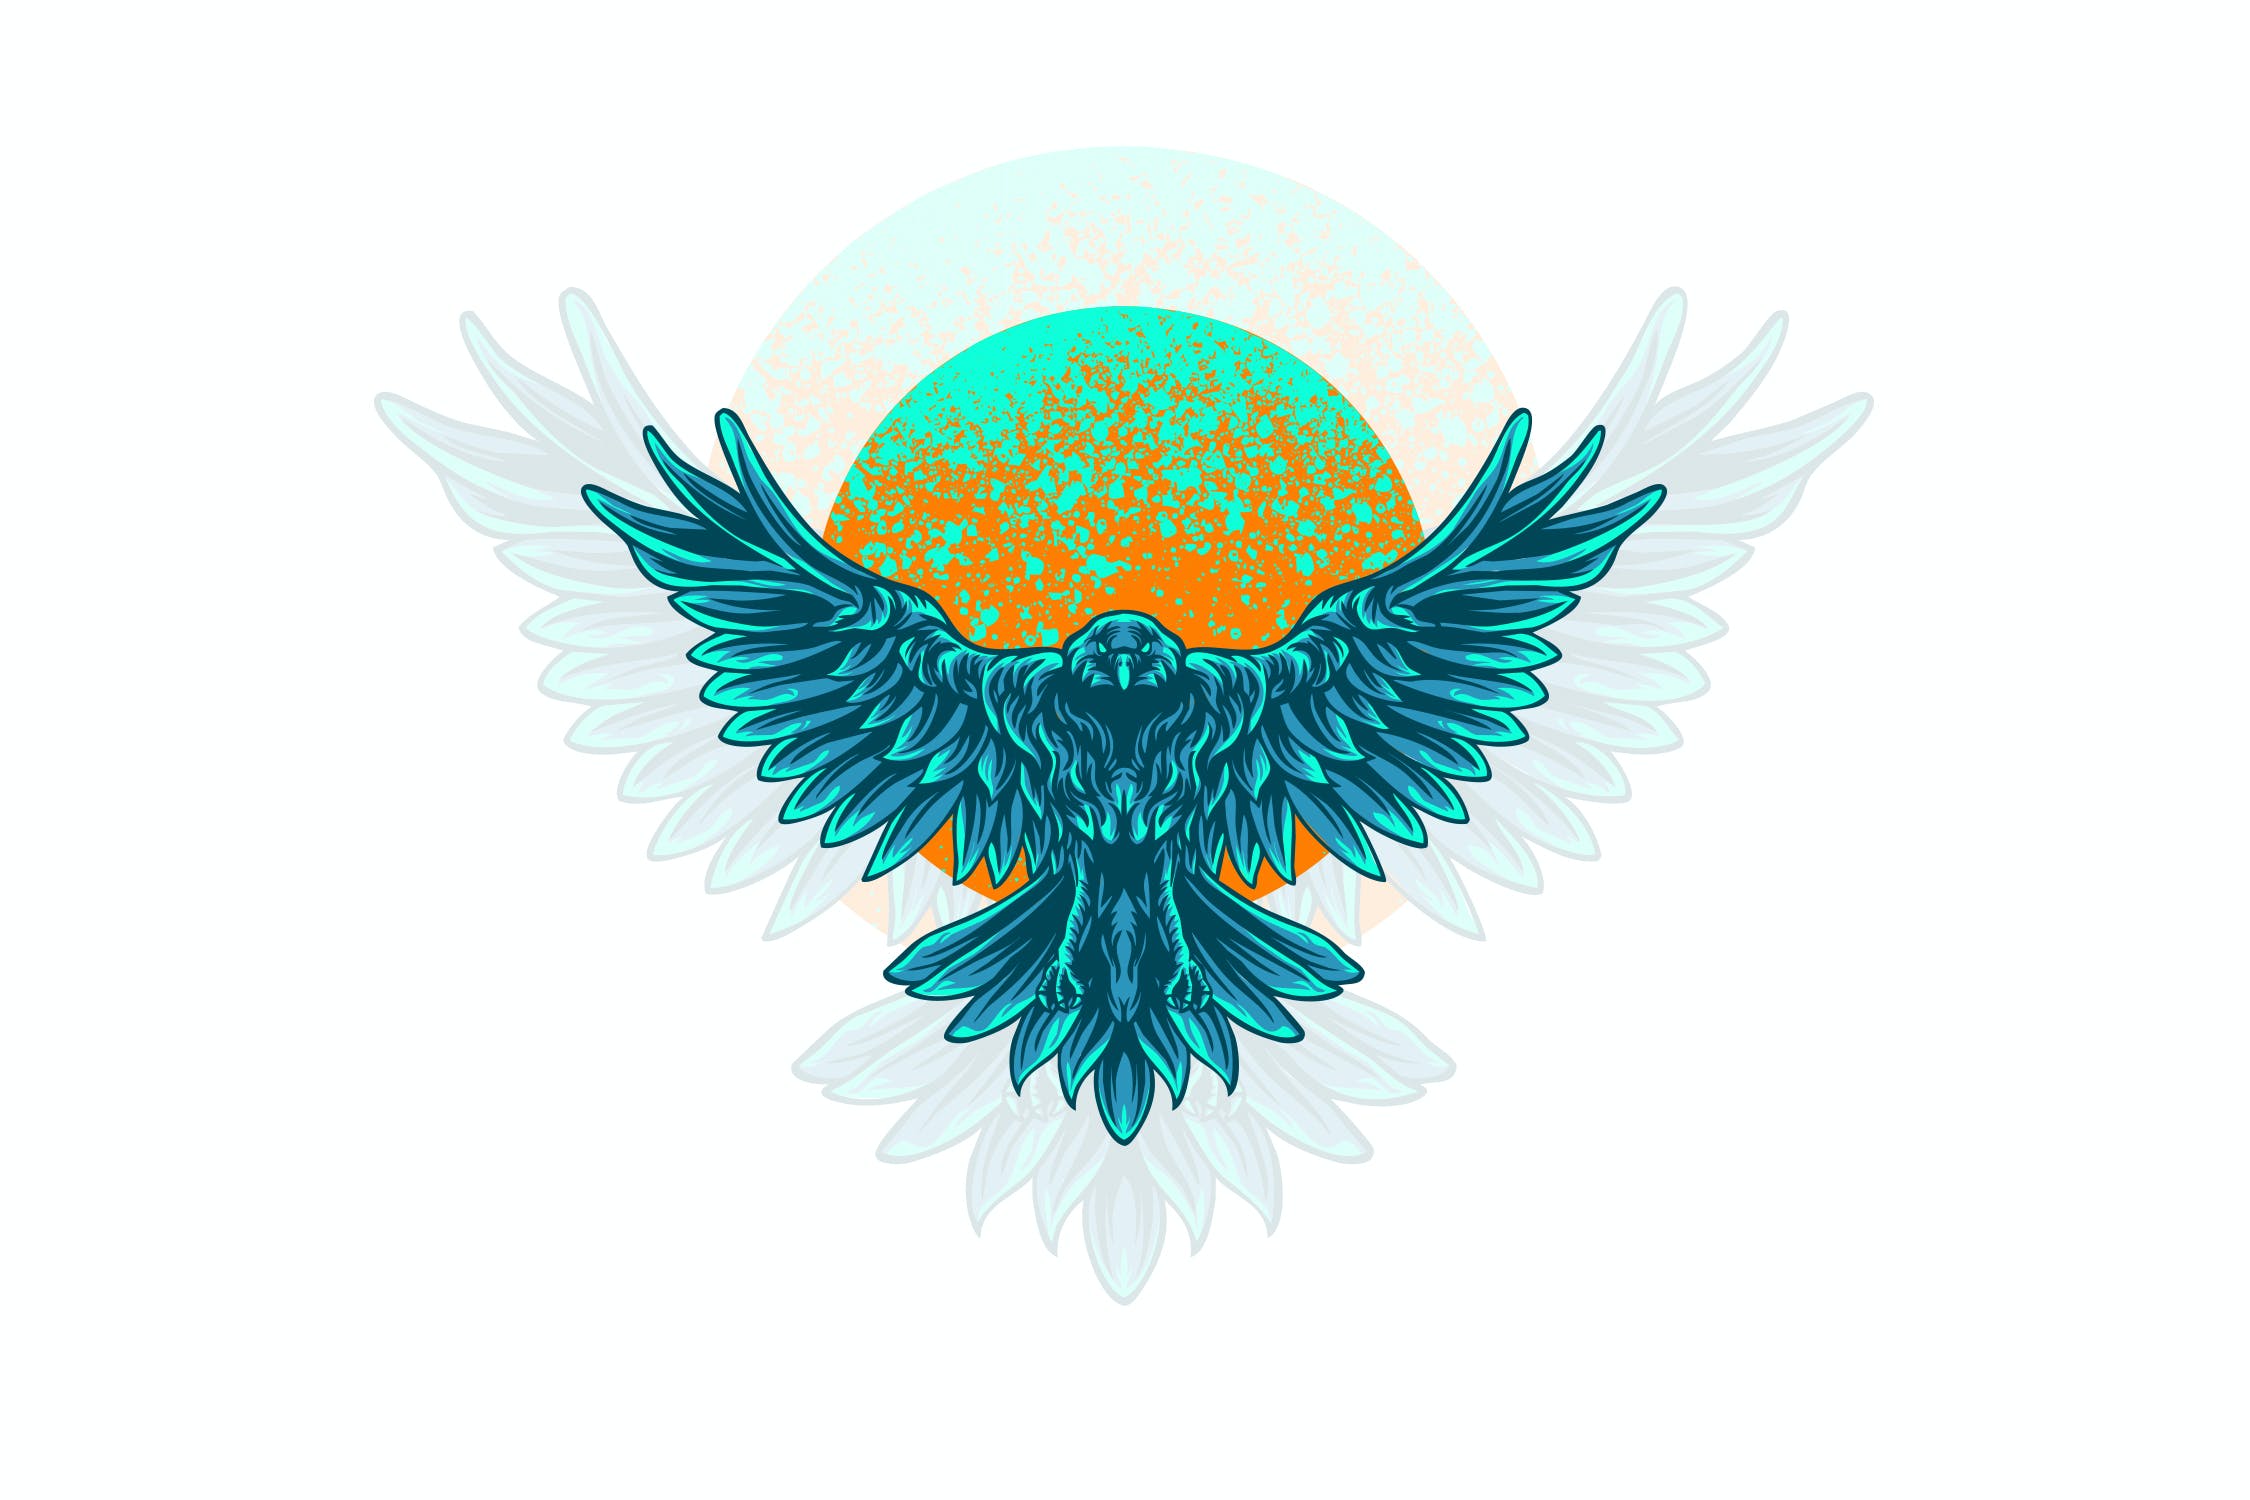 展翅乌鸦动物徽章插画 raven animal illustration 图片素材 第2张